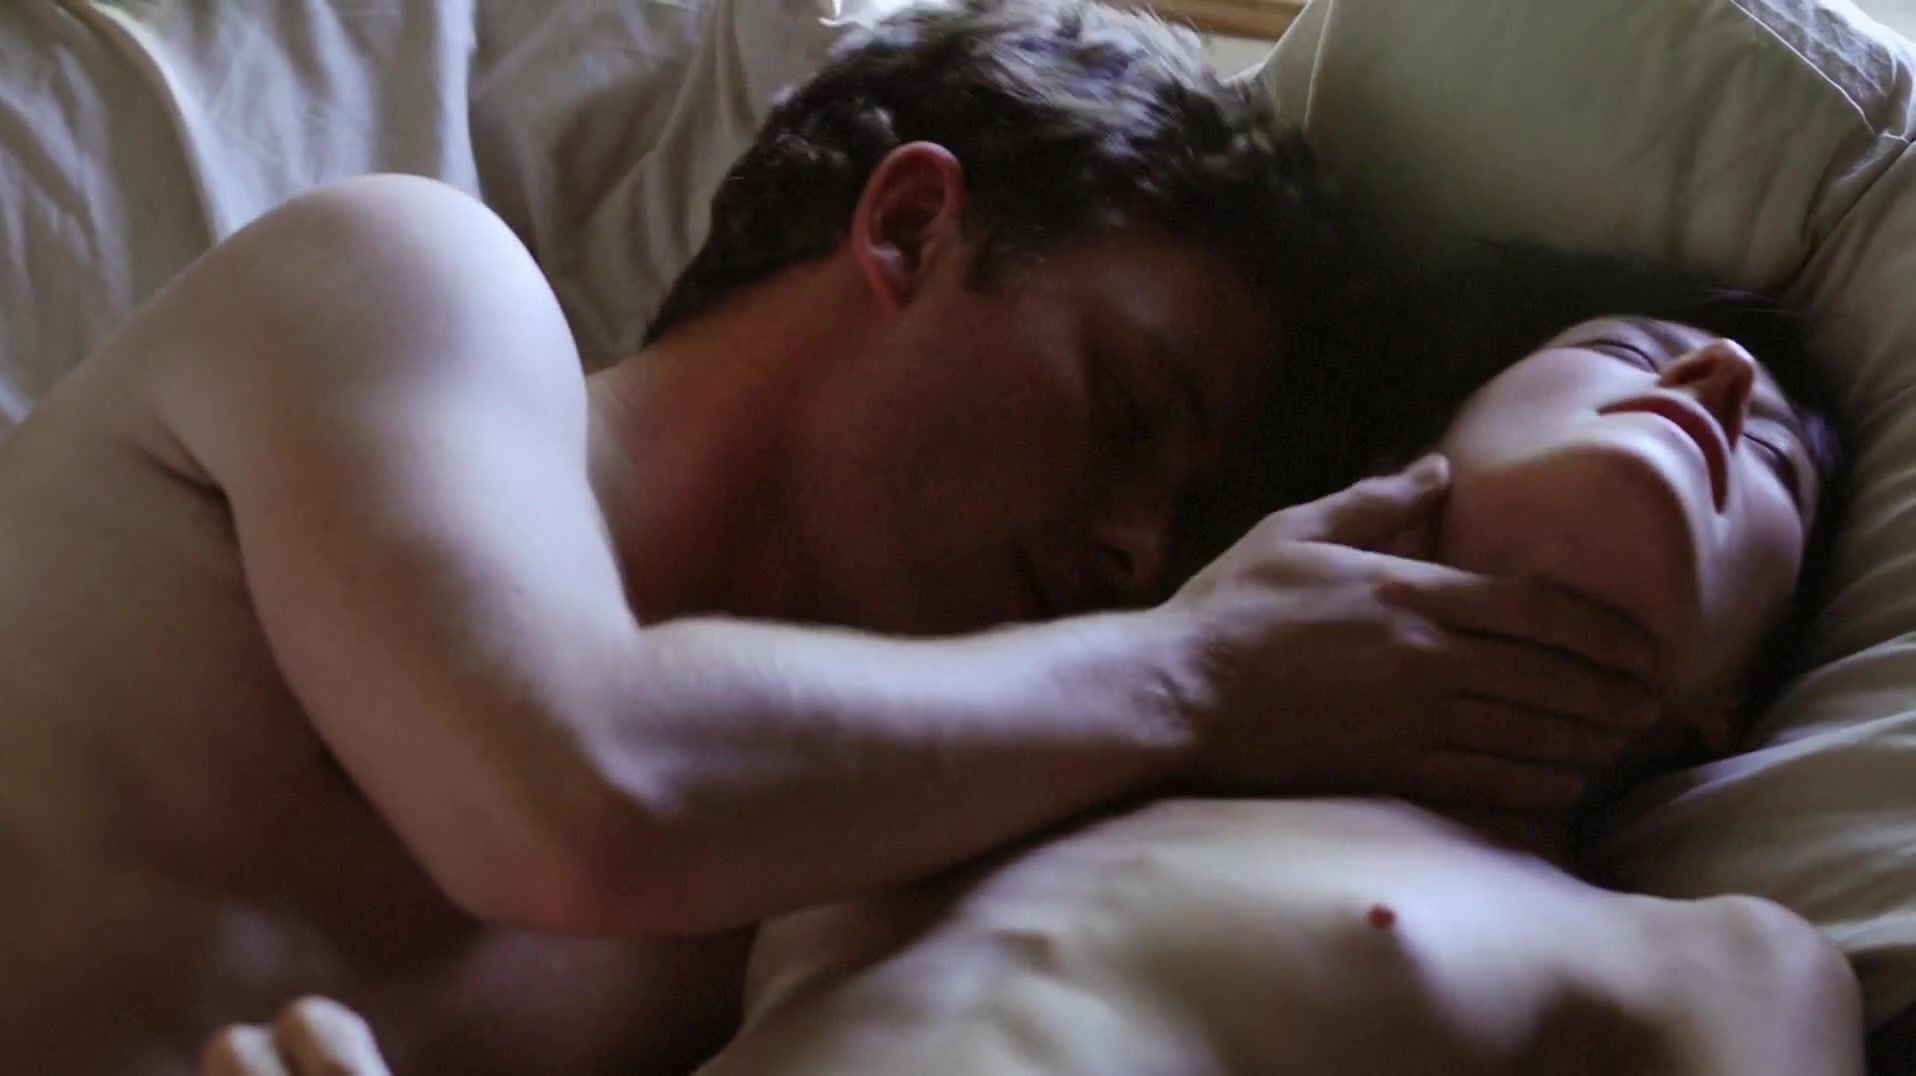 Hot Fuck Full Frontal nudity scene of erotic movie "Hide and Seek aka Amorous" Boy Girl